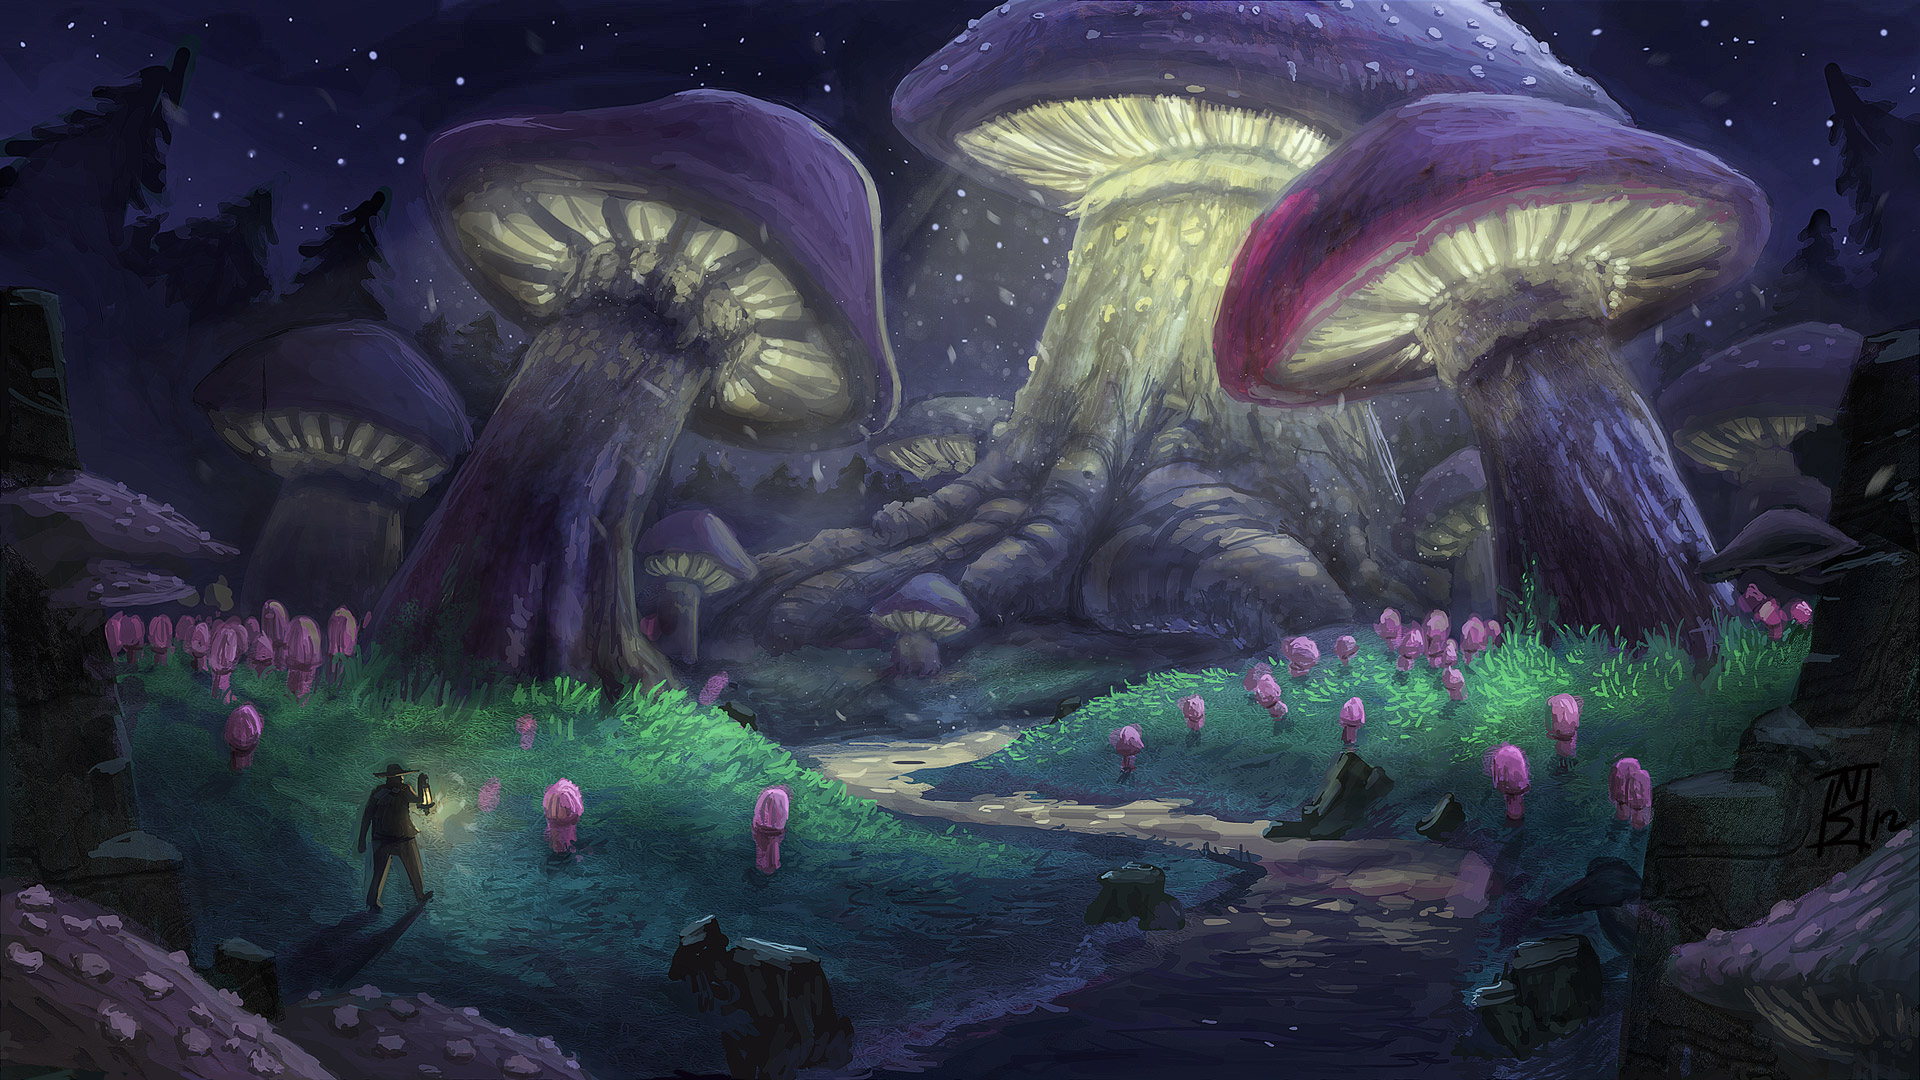 Mushroom Forest by Niksibaksen on